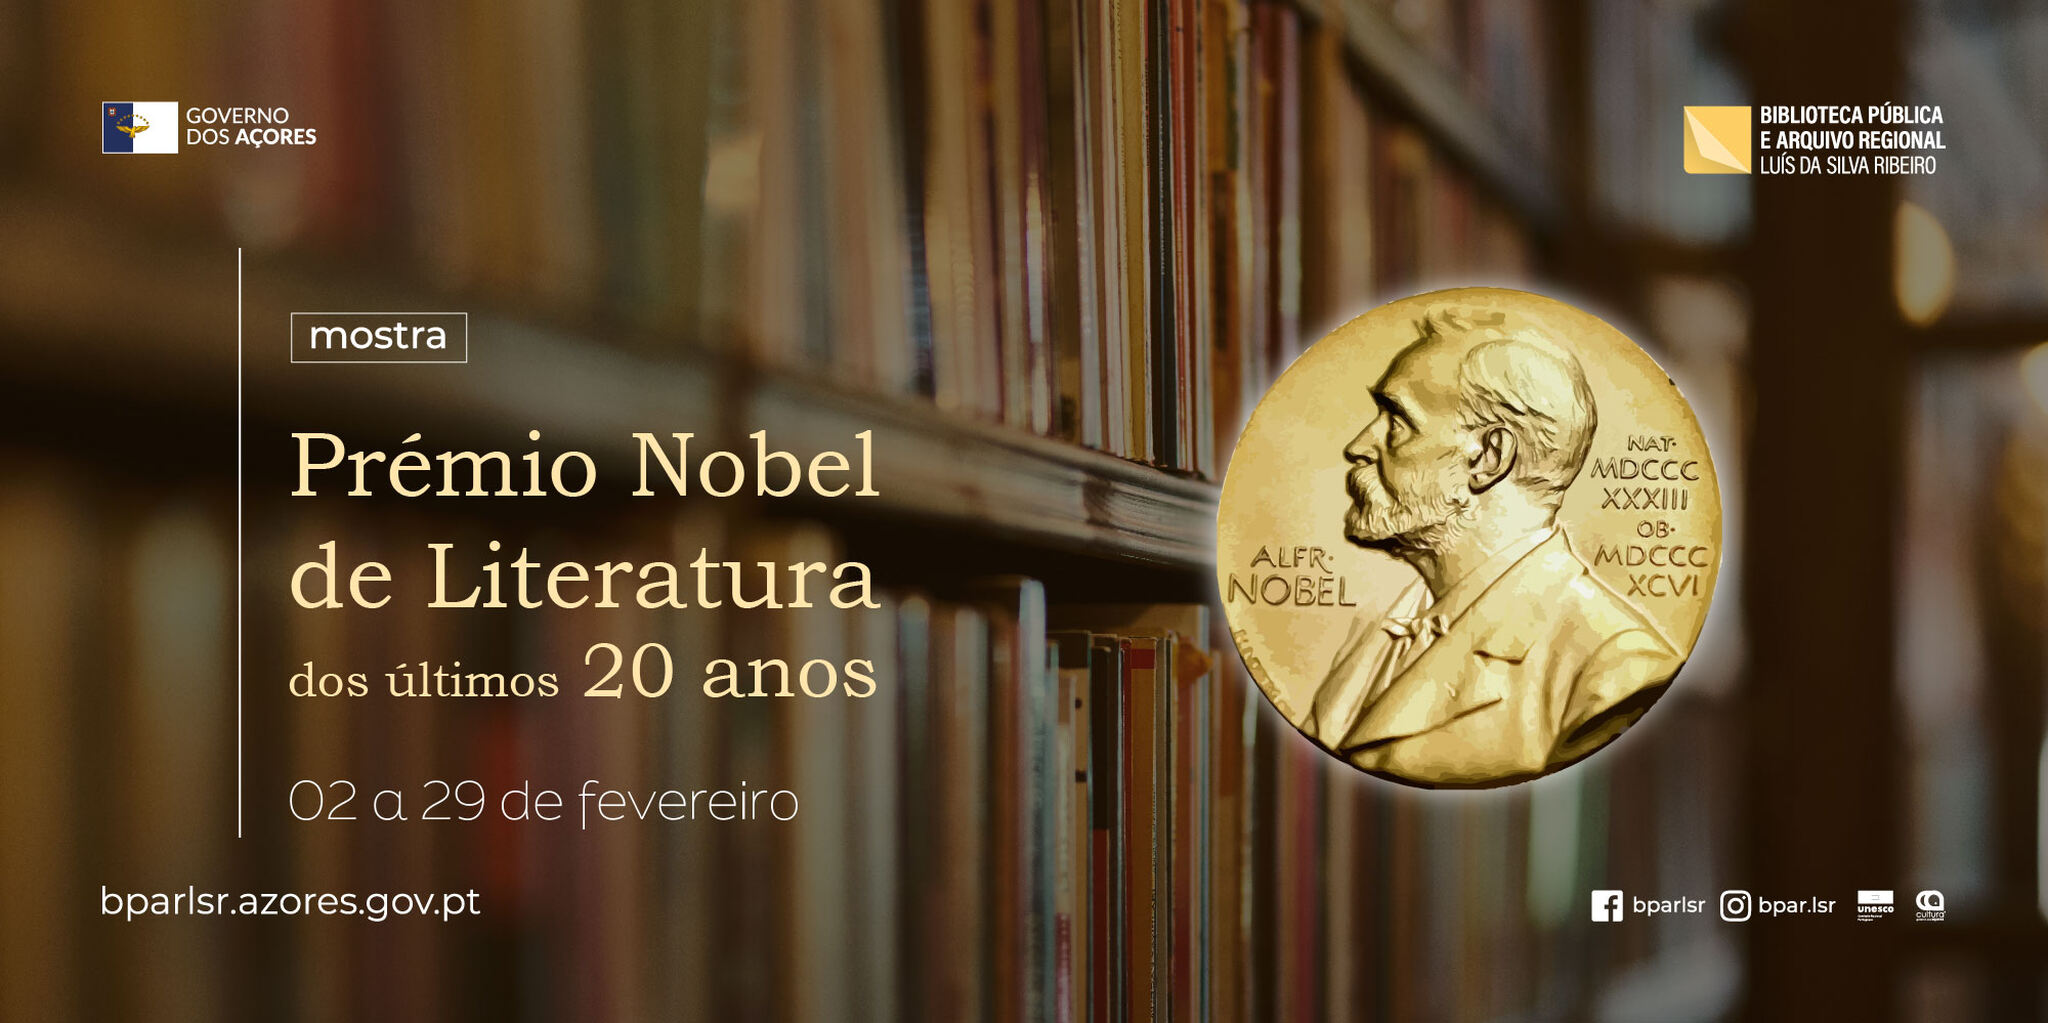 Mostra | Prémio Nobel de Literatura dos últimos 20 anos